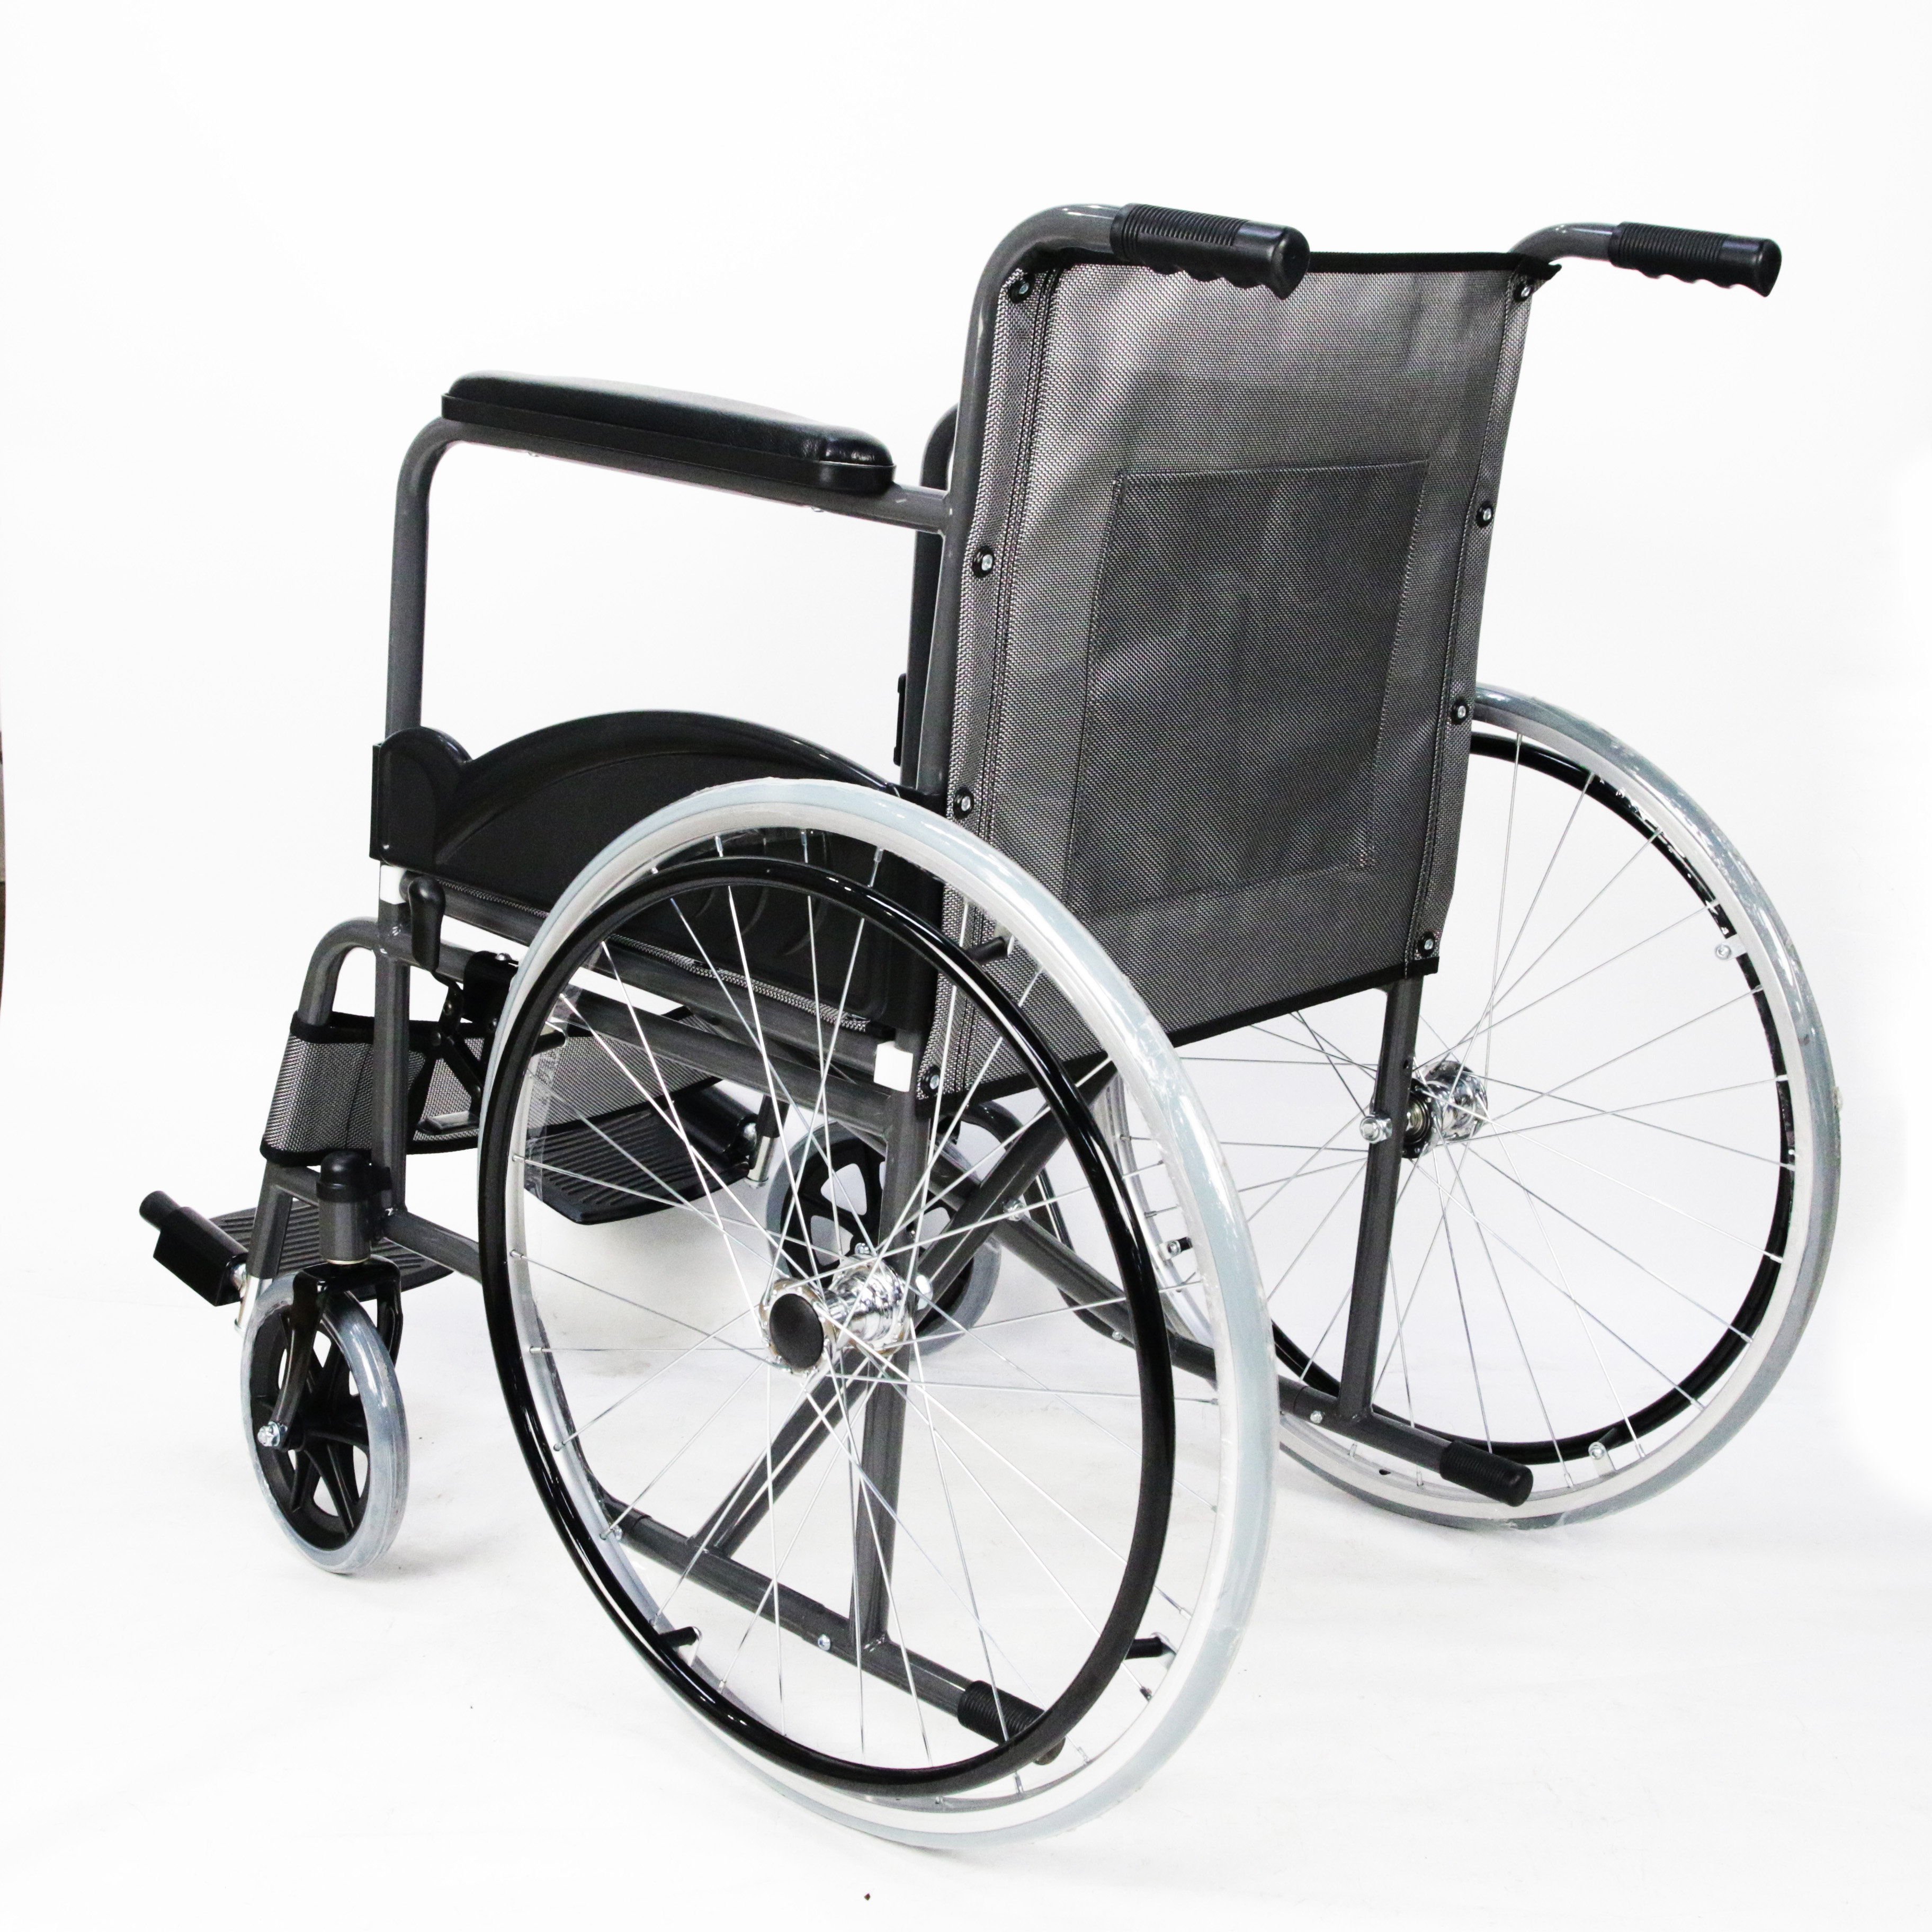 Breathable teslin nylon mesh wheelchair price list Portable and foldable manual wheelchair